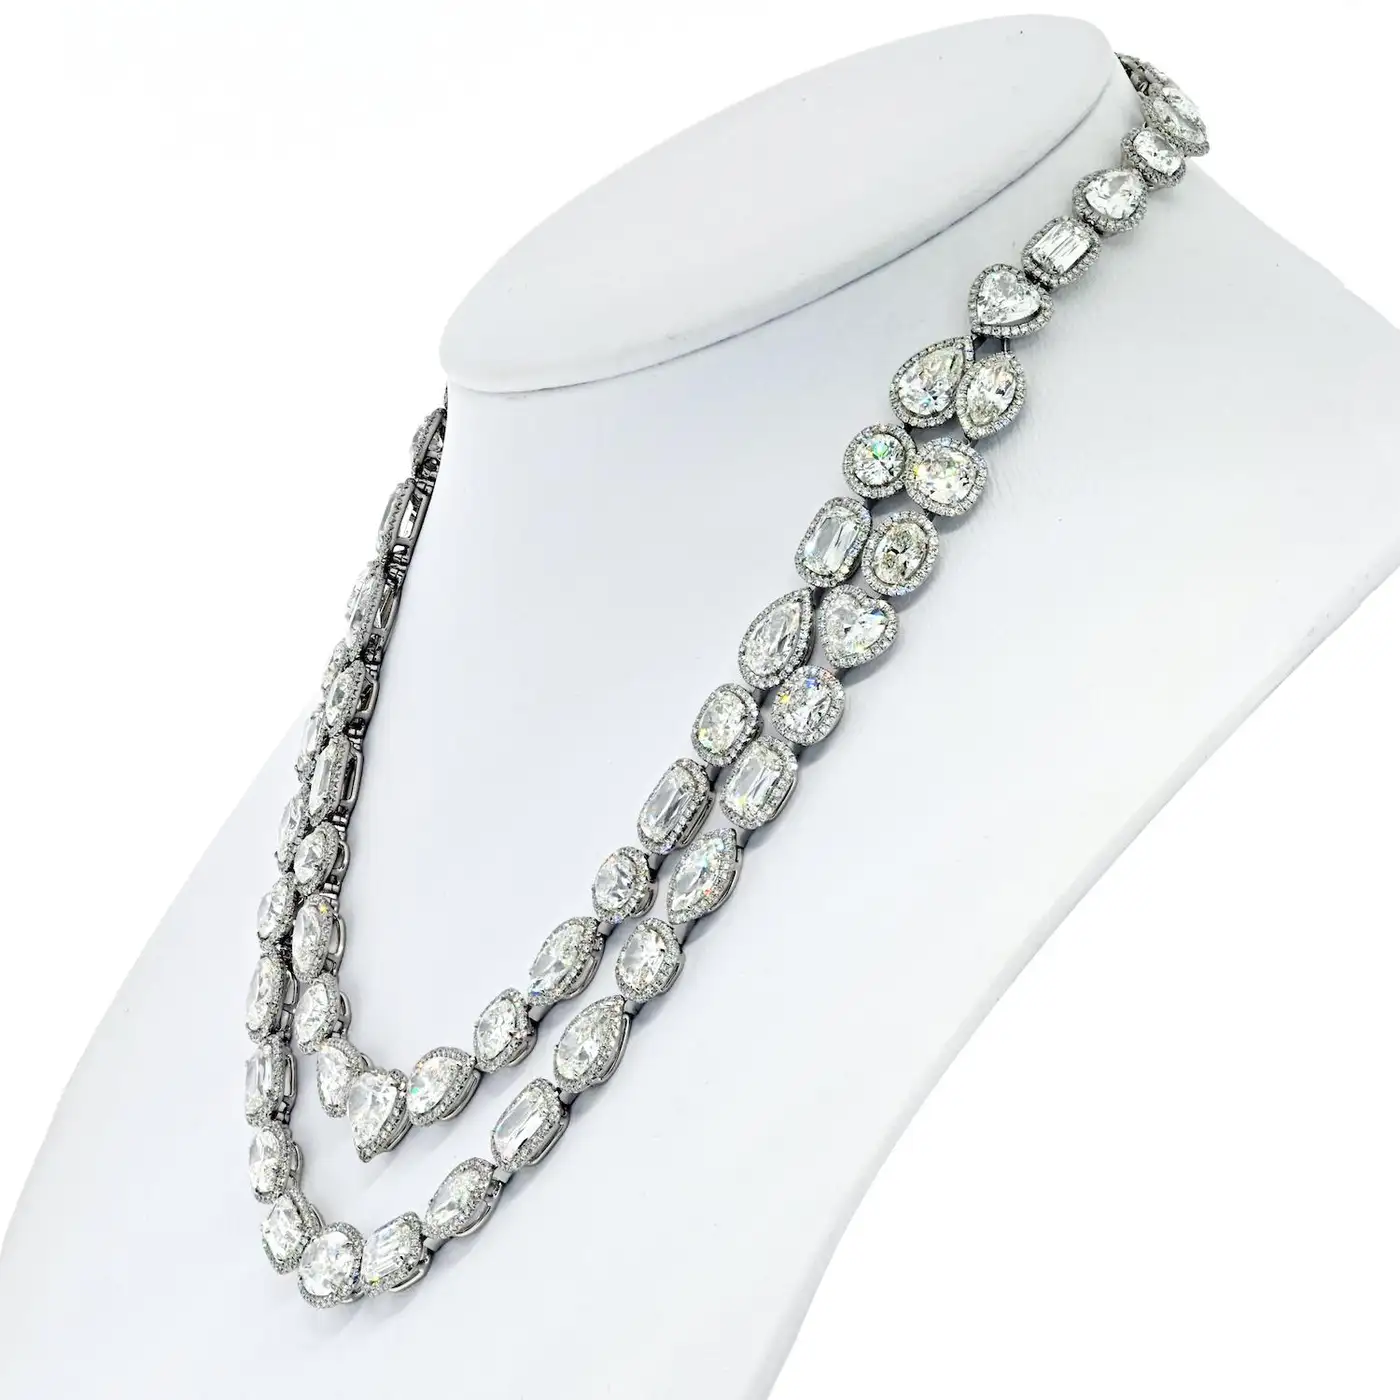 William-Goldberg-63-Carat-Spectacular-Diamond-Infinity-Necklace-9.webp